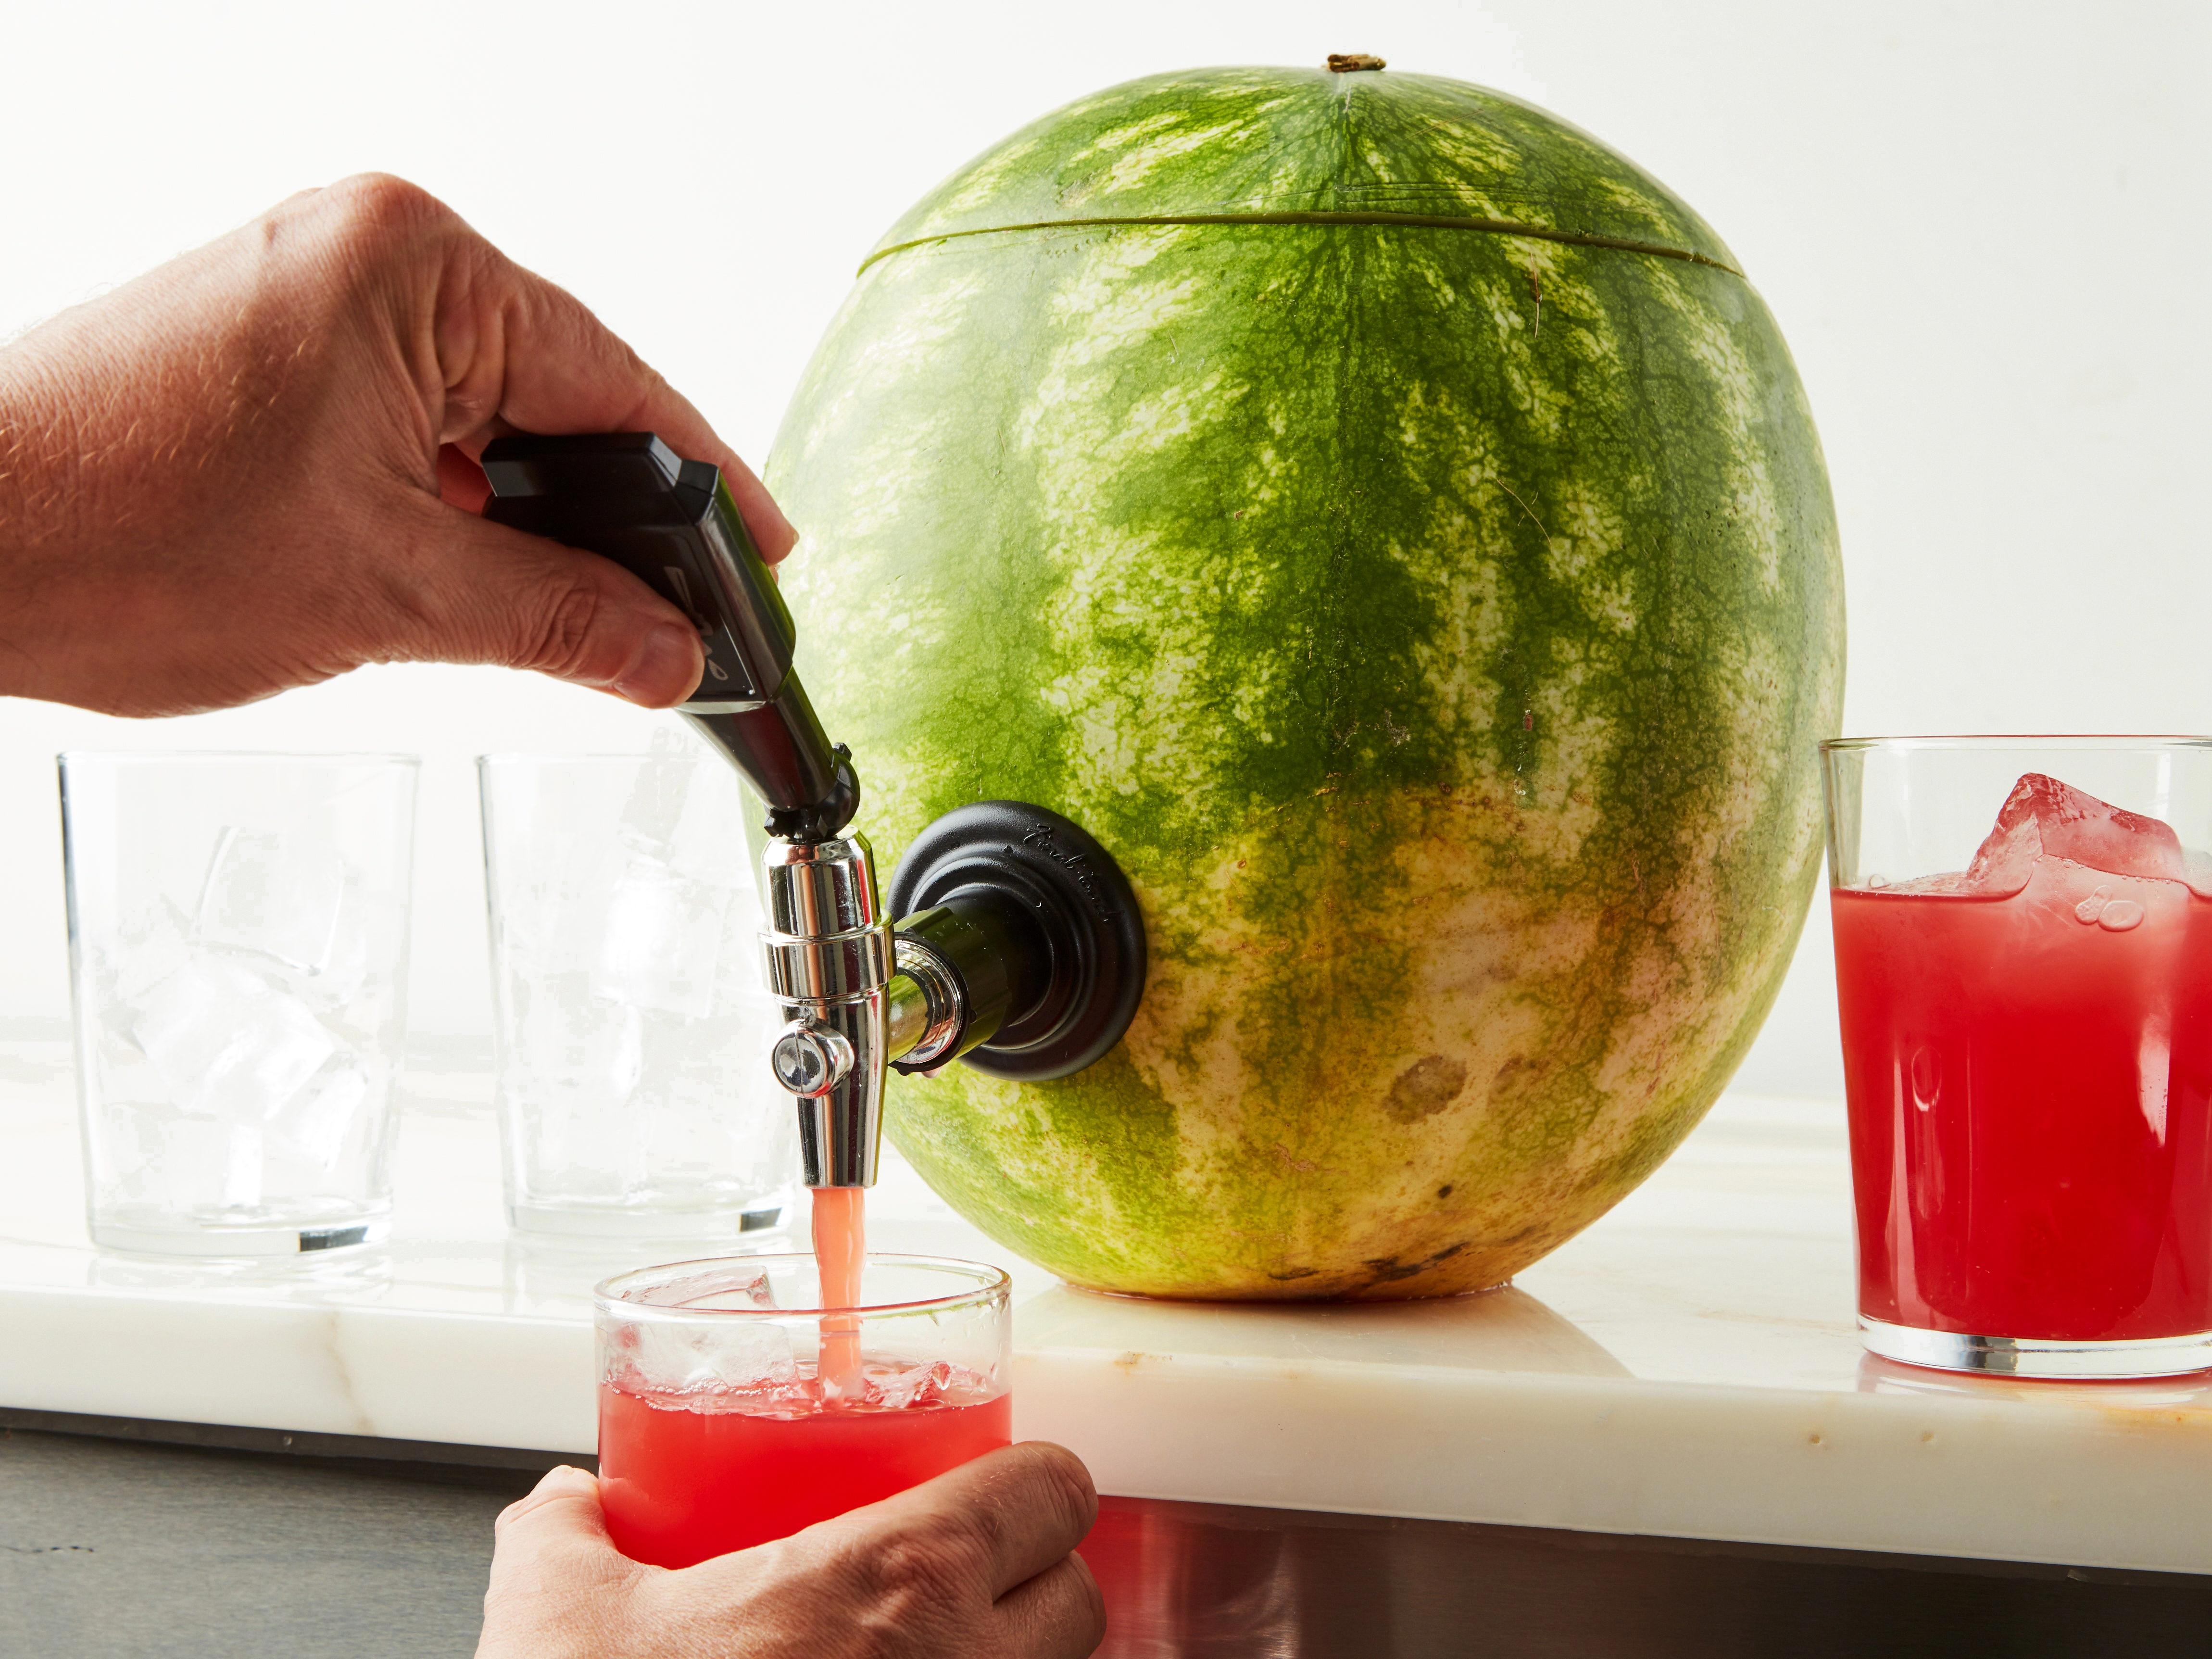 watermelon tap kit